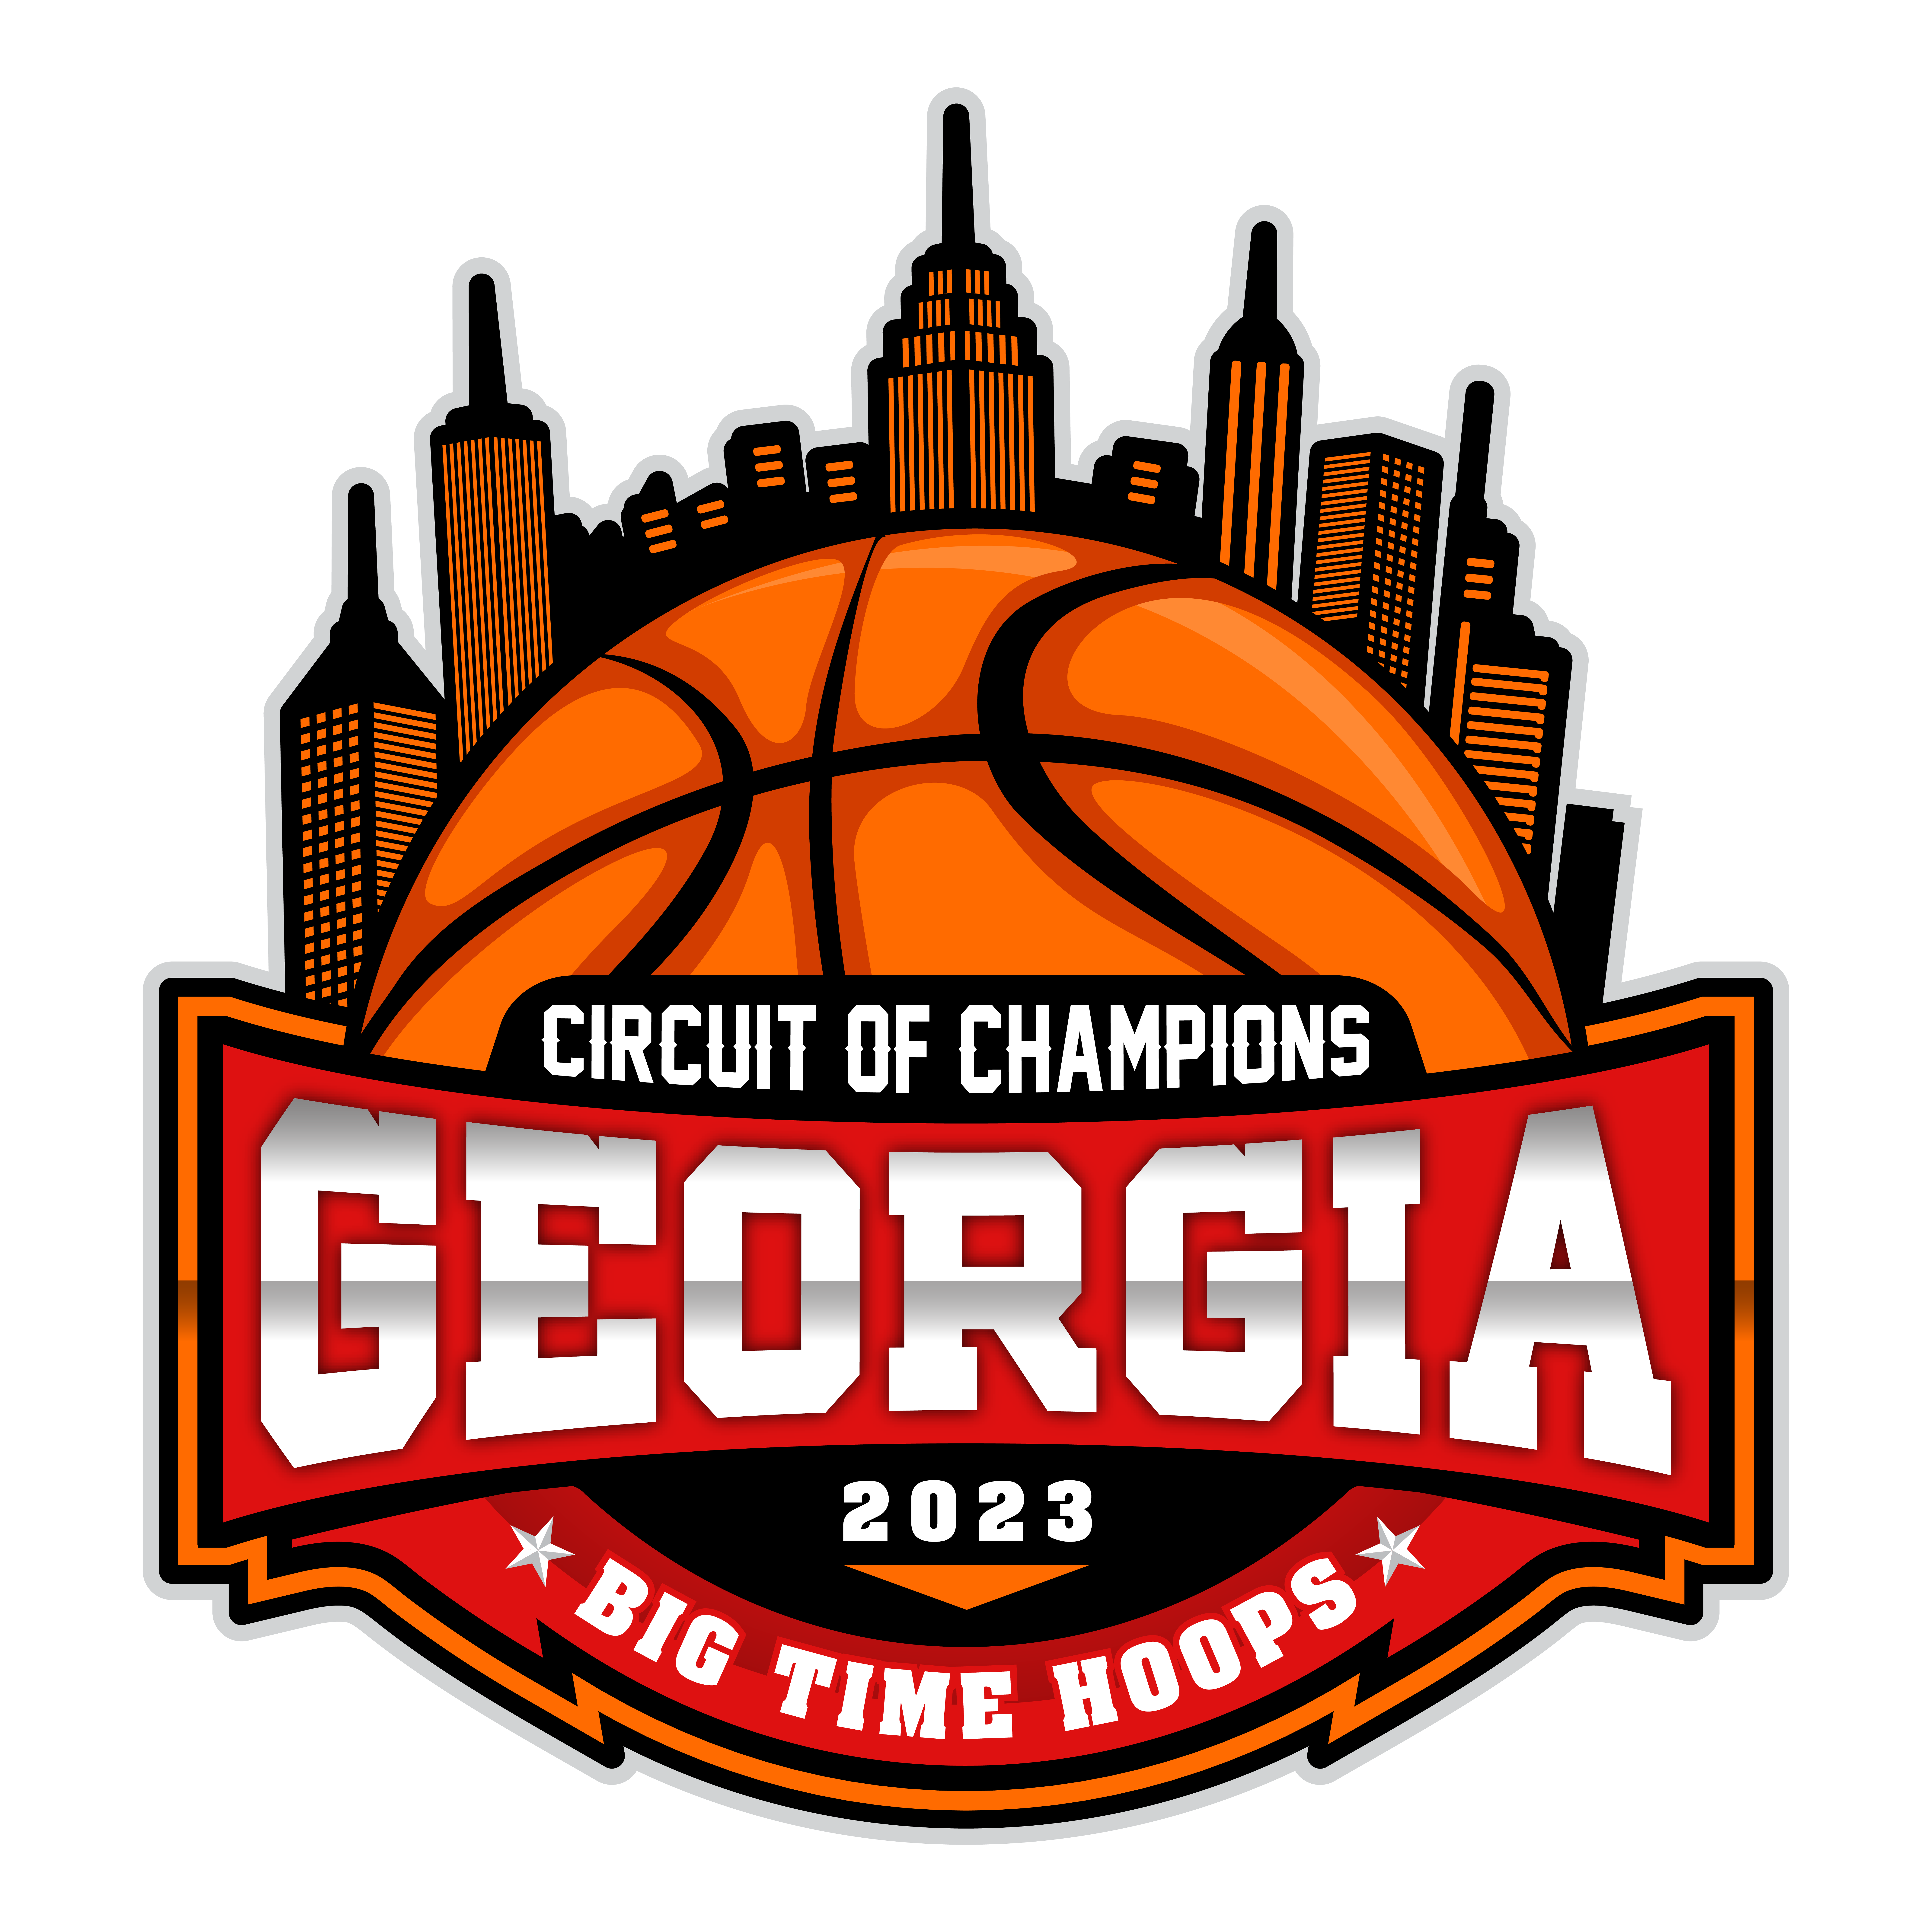 Circuit of Champions Georgia White